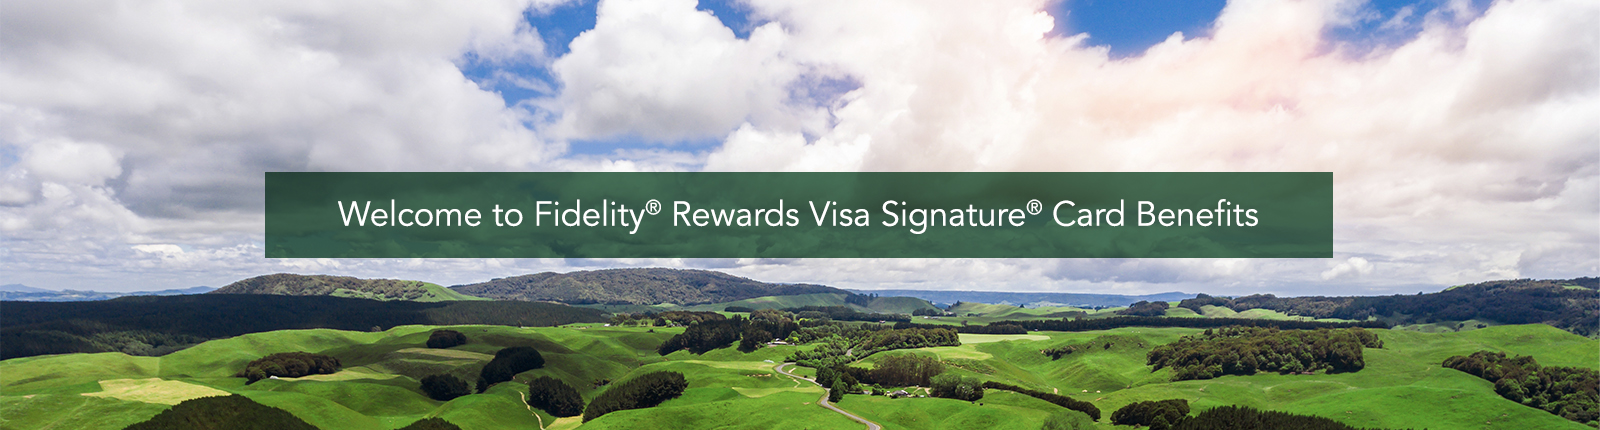 Fidelity® Rewards Visa Signature® Card